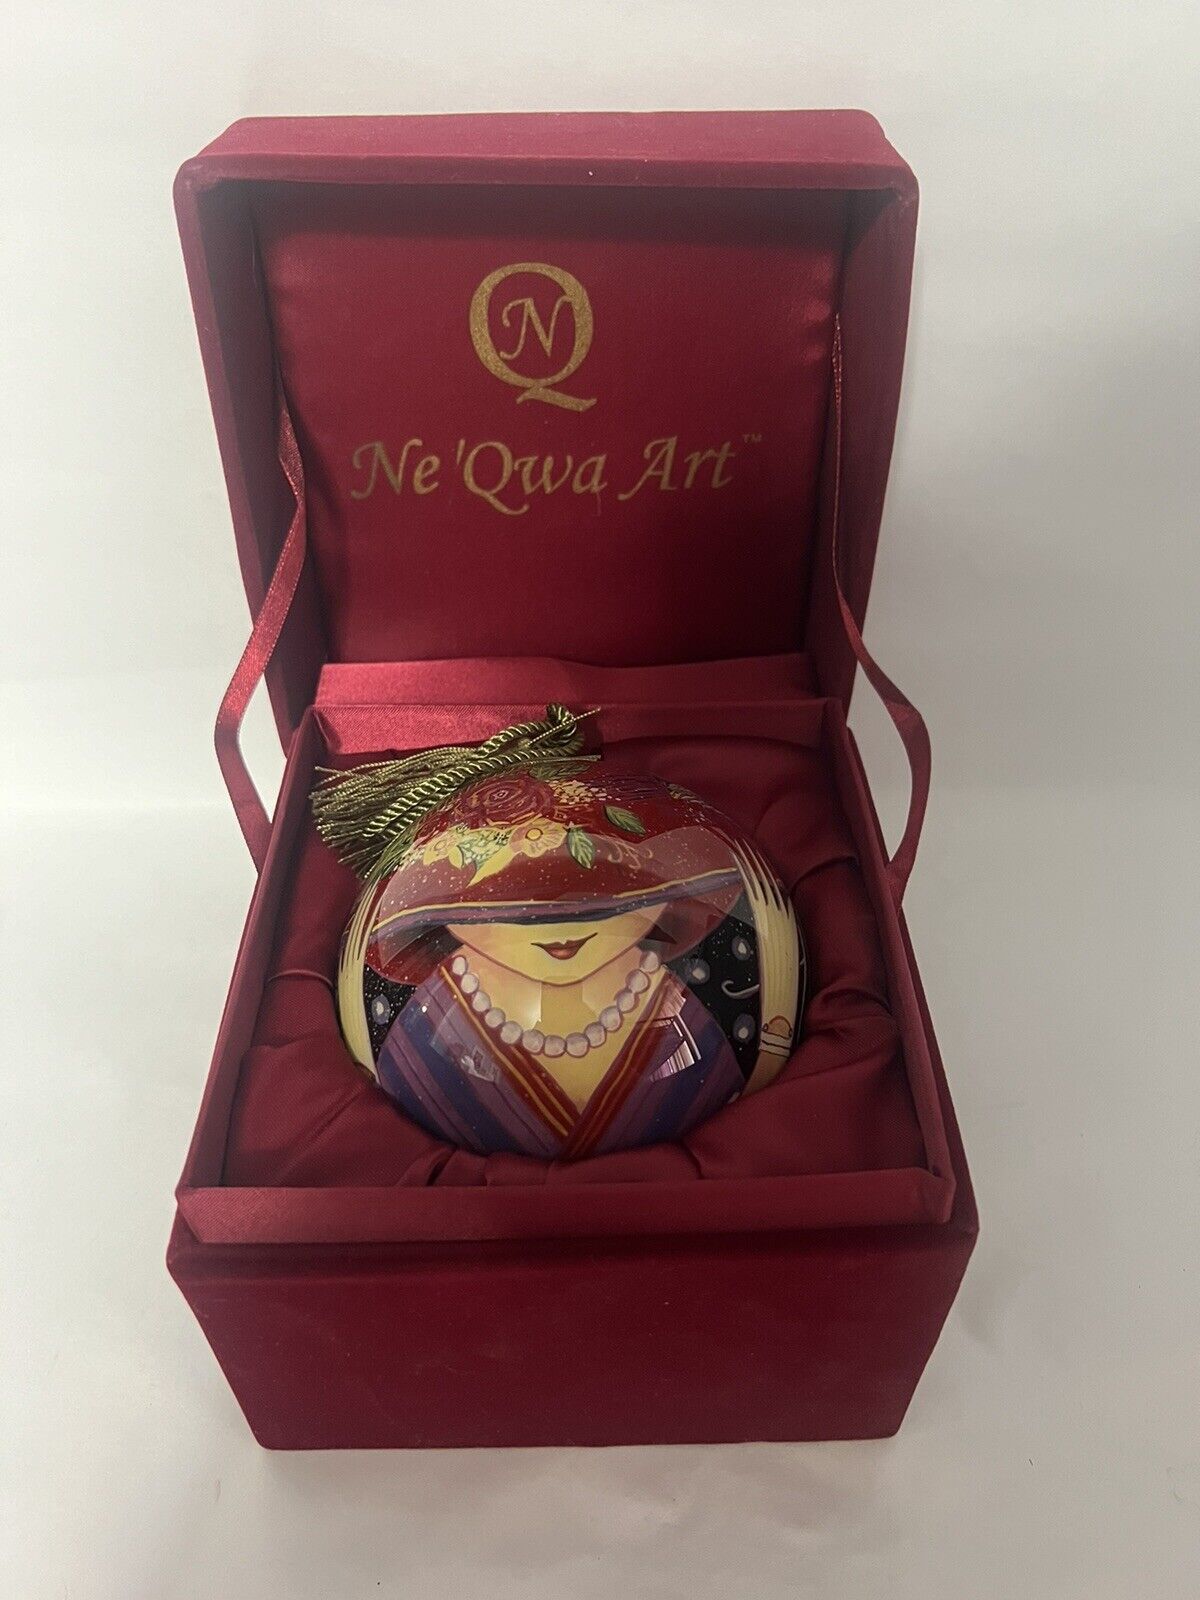 Ne'Qwa Art Glass Ball Ornament “Meet Me For Tea” Susan Winget Hand Painted.